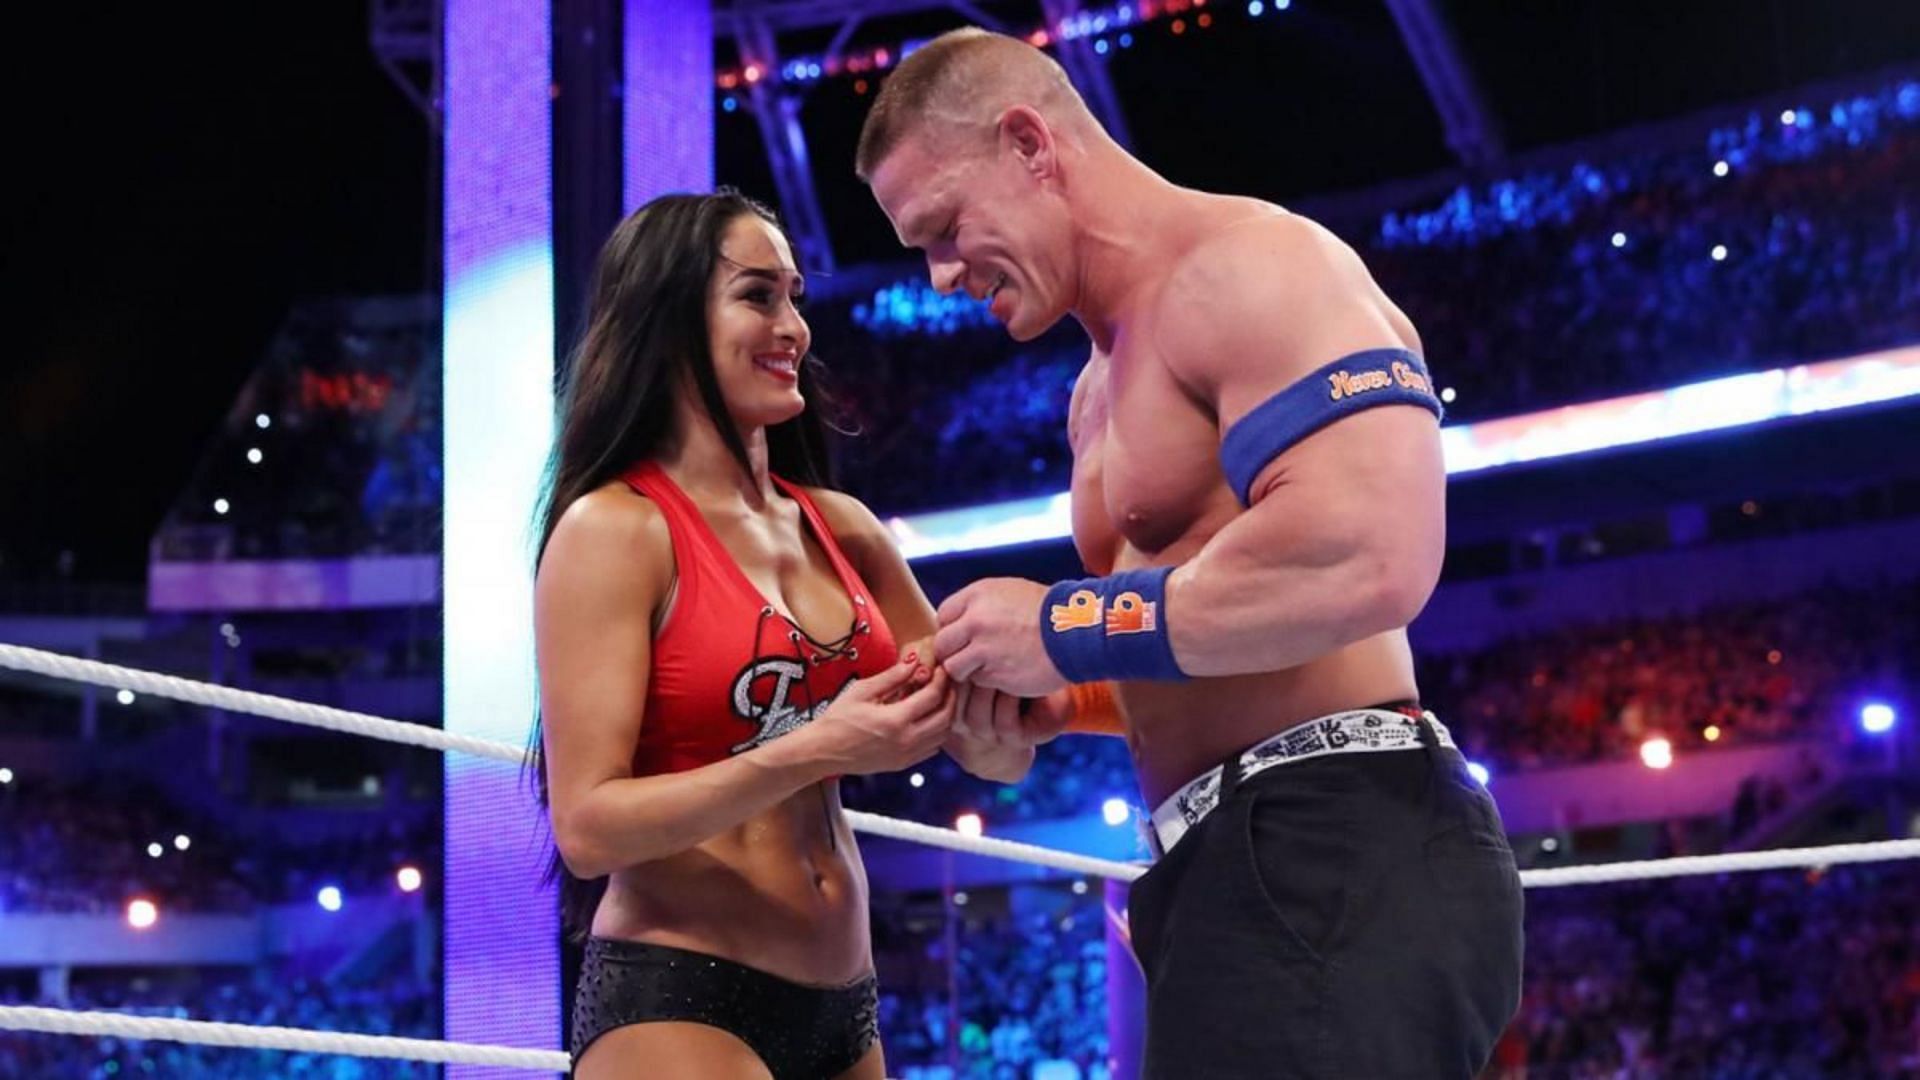 WWE Hall of Famer Nikki Bella called off her engagement to John Cena